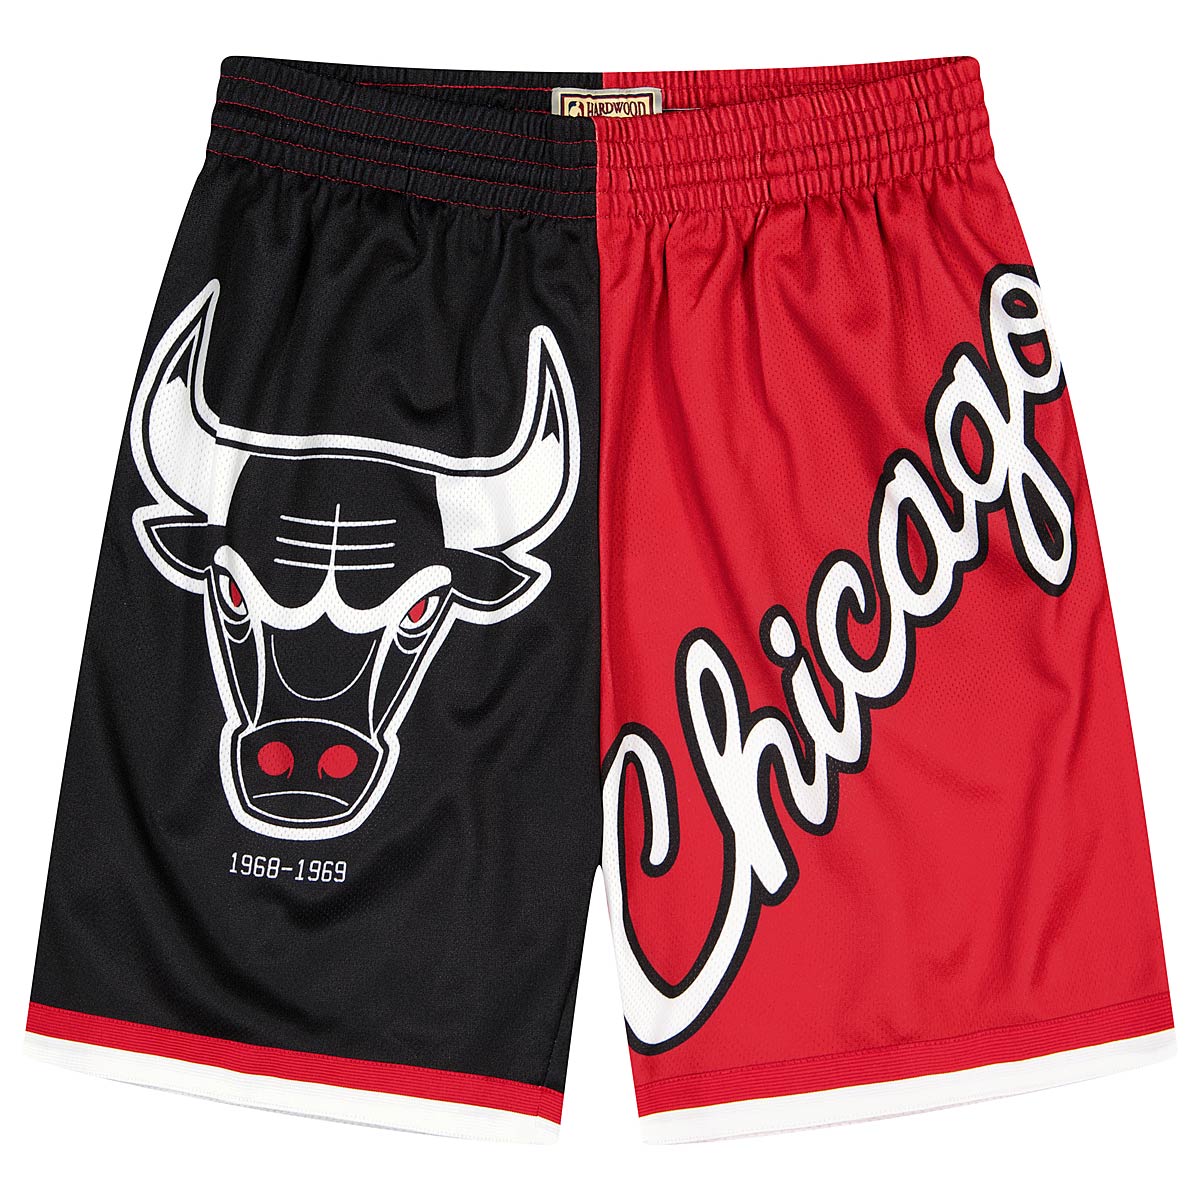 Buy NBA CHICAGO BULLS PINSTRIPE OVERSIZED T-SHIRT for N/A 0.0 |  Kickz-DE-AT-INT